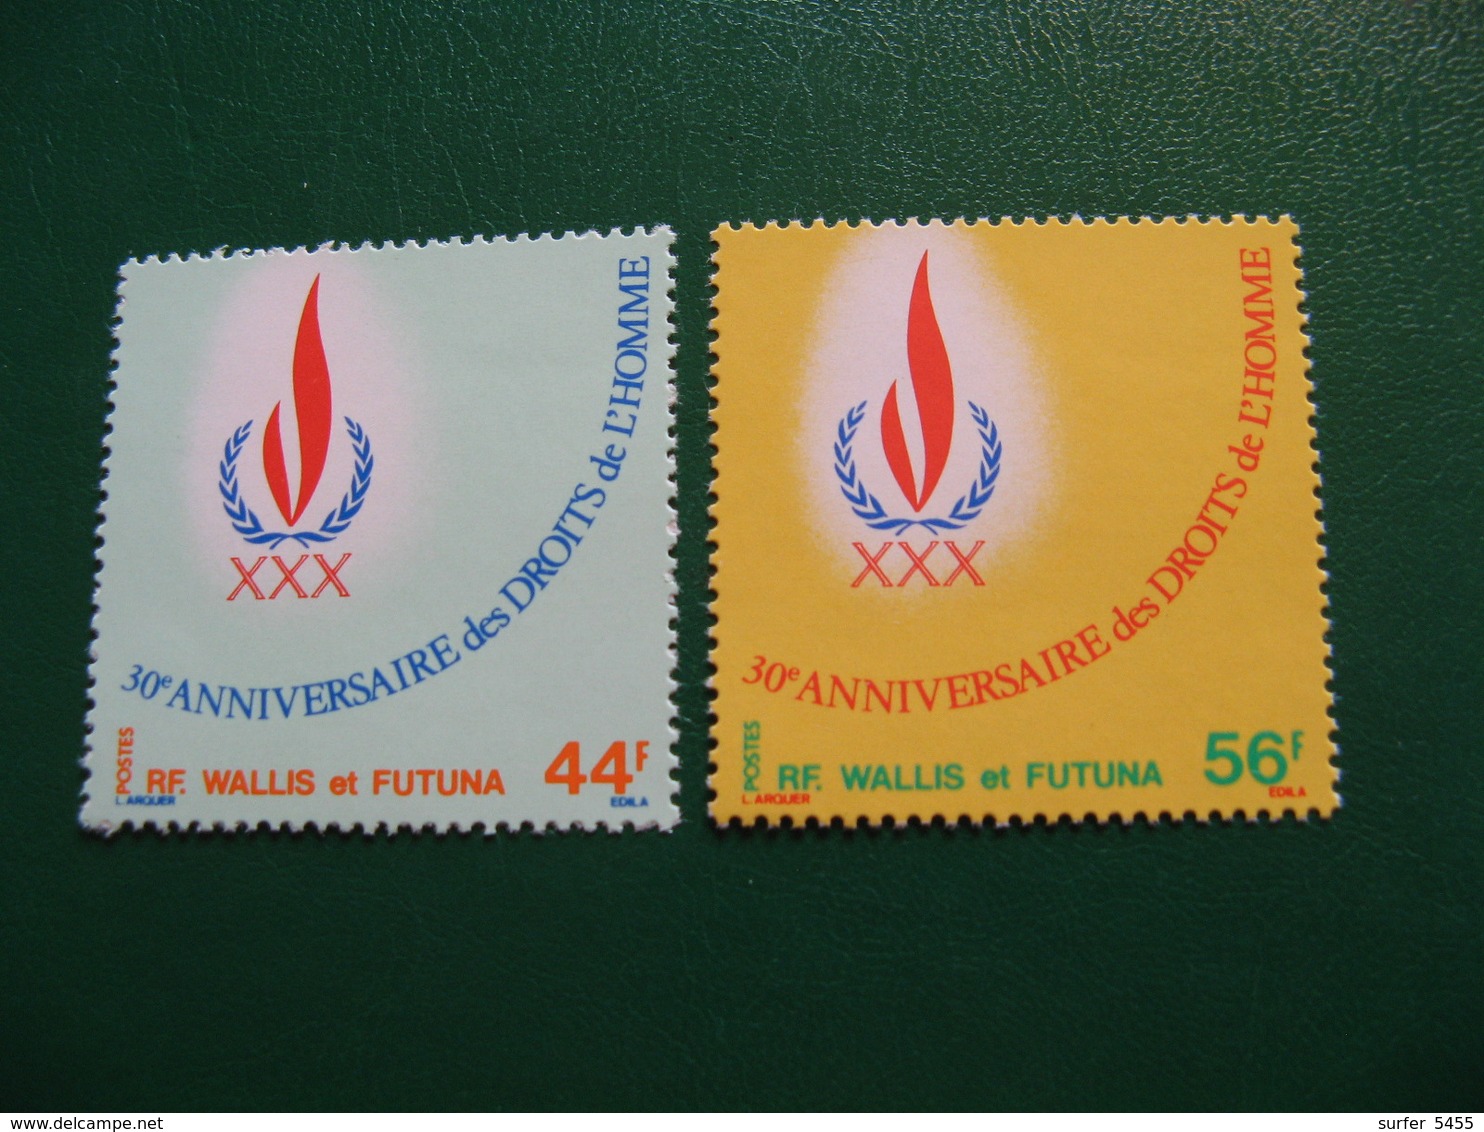 WALLIS YVERT POSTE ORDINAIRE N° 224/225 NEUFS** LUXE COTE 4,90 EUROS - Unused Stamps